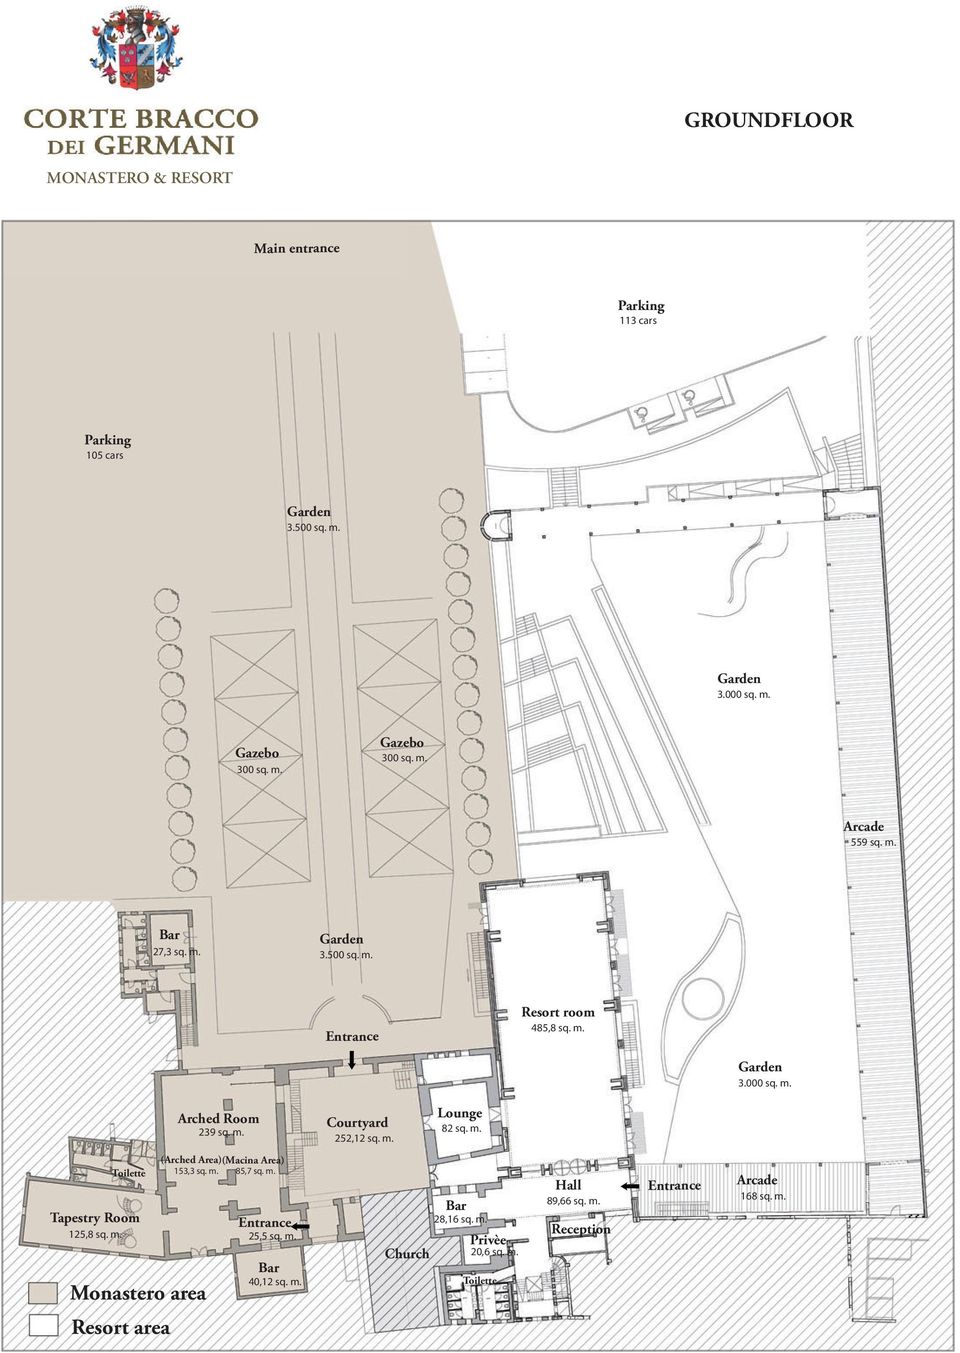 m. Tapestry Room 125,8 sq. m. Monastero area (Arched Area)(Macina Area) 153,3 sq. m. 85,7 sq. m. 25,5 sq. m. Bar 40,12 sq.